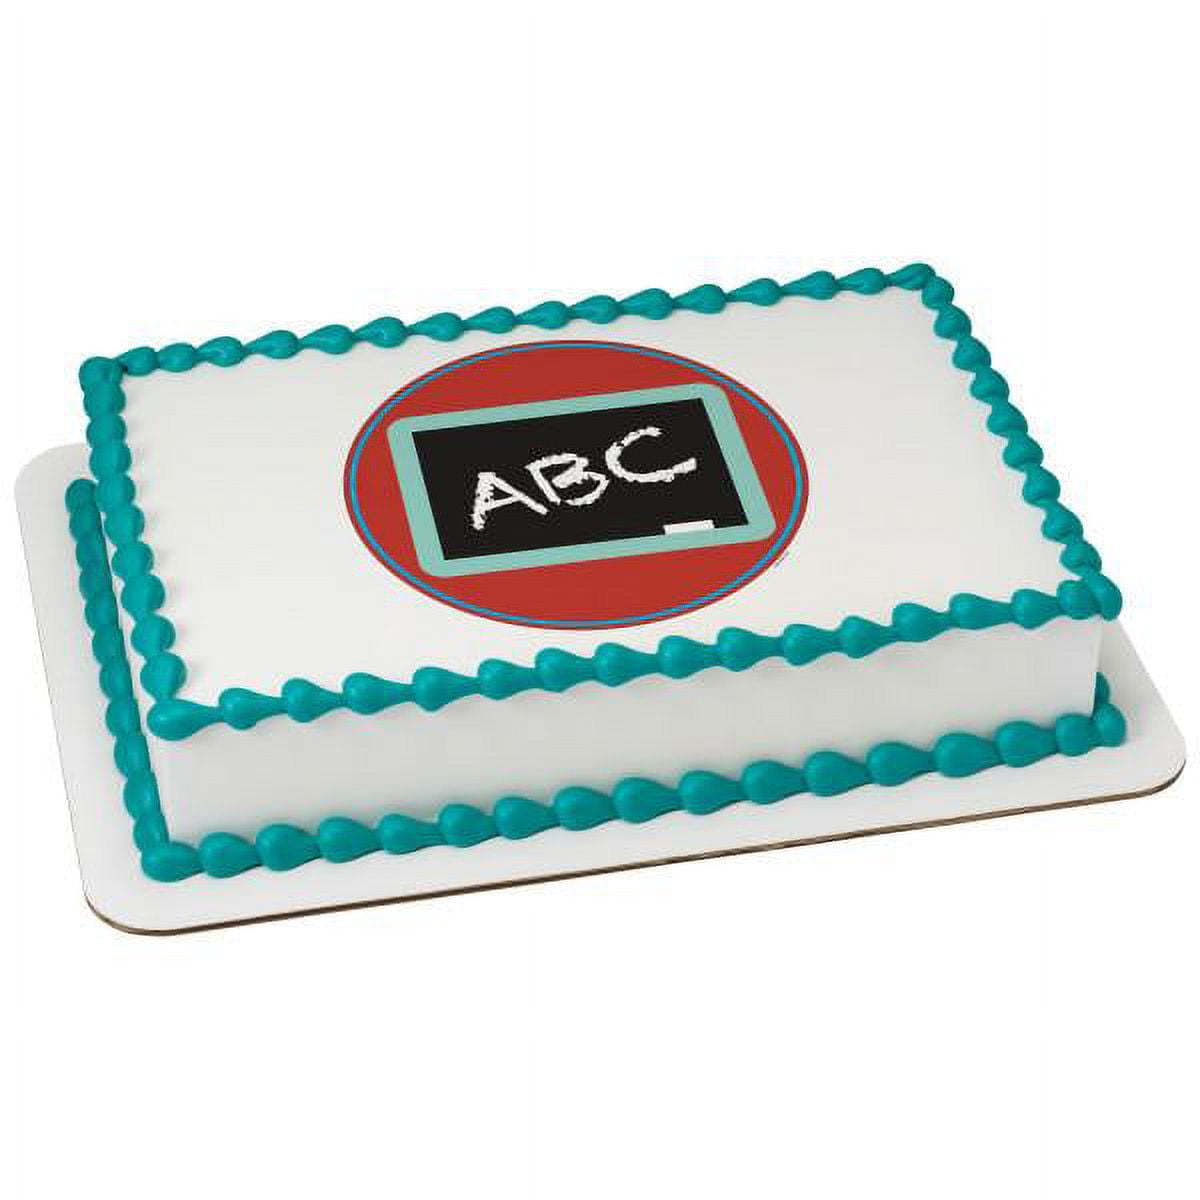 ABC Cake Topper Price in India - Buy ABC Cake Topper online at Flipkart.com